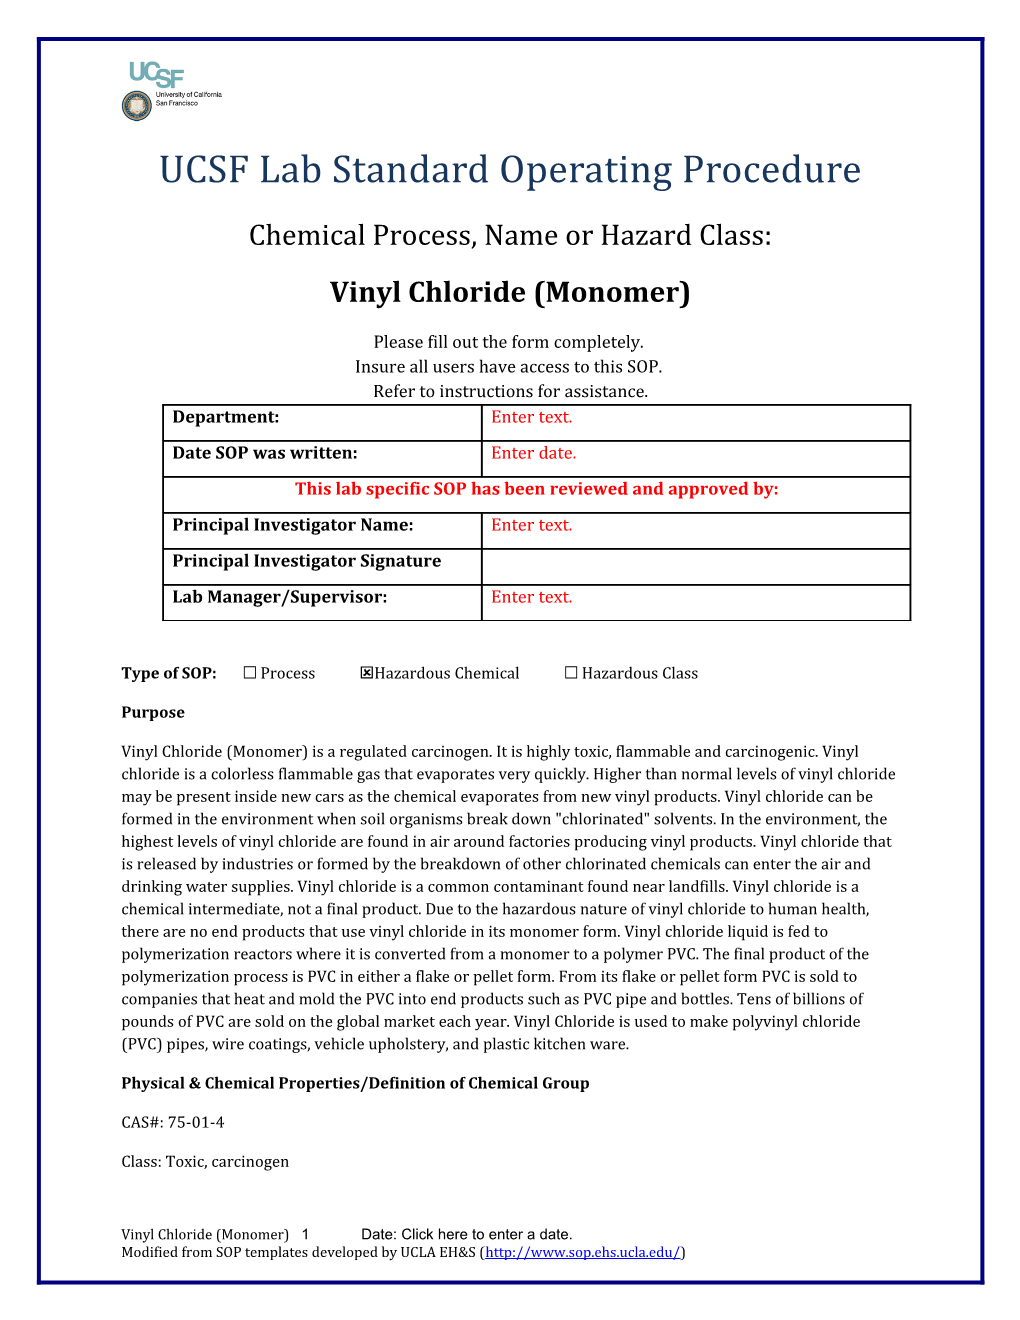 UCSF Lab Standard Operating Procedure s3